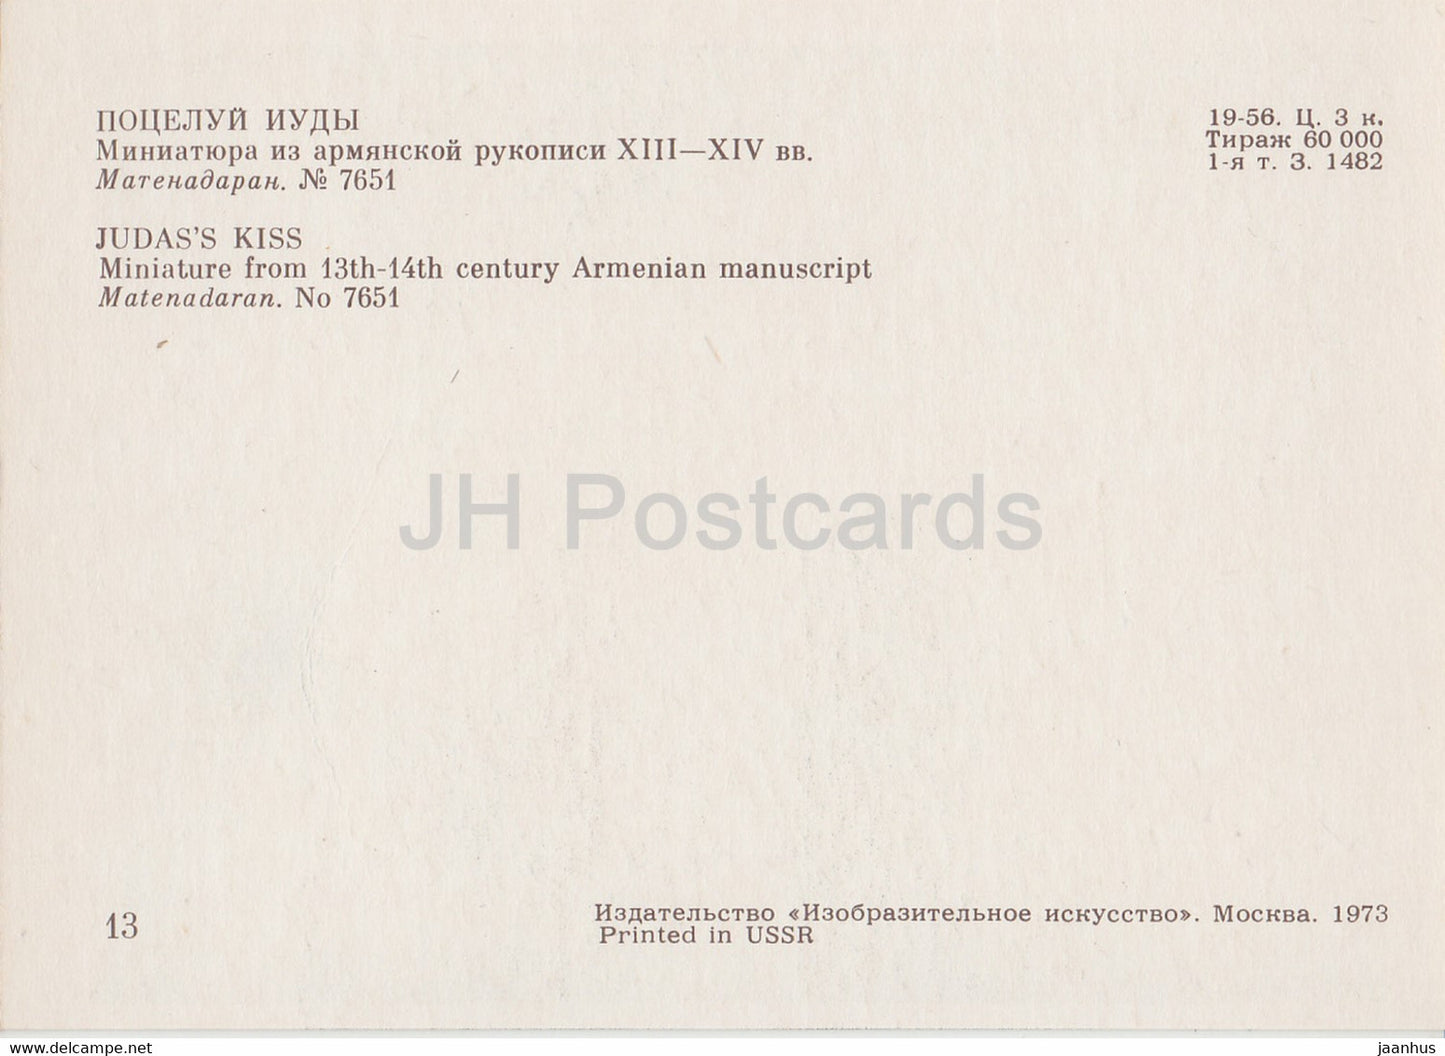 Miniaturen in armenischen Manuskripten – Judas Kiss – Matenadaran – Armenien – 1973 – Russland UdSSR – unbenutzt